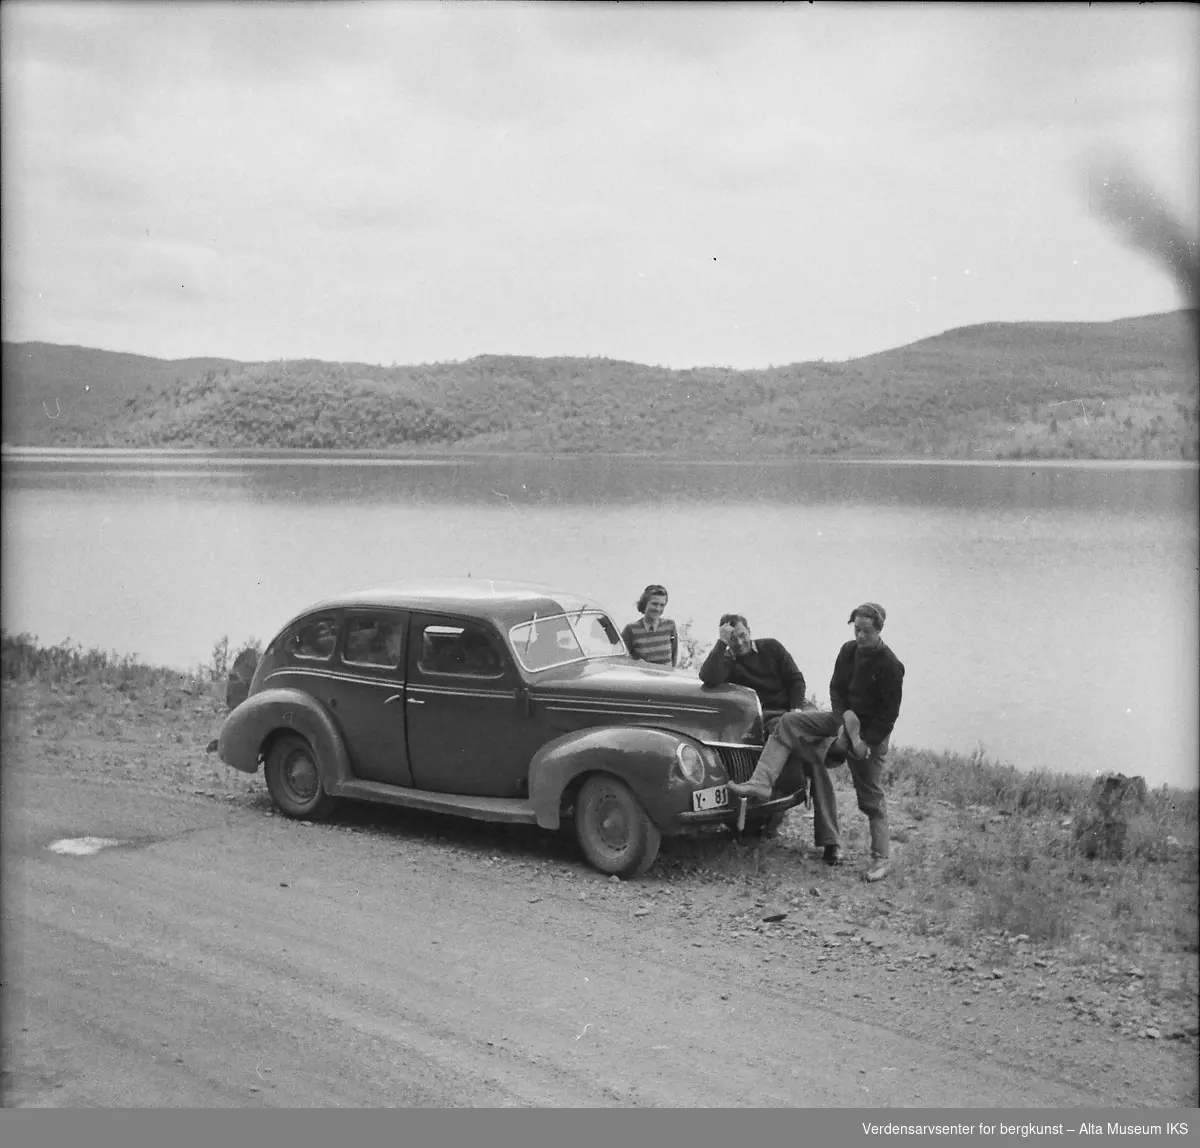 Tre unge reisende poserer med bilen foran en innsjø. Bildet er fra en Finlandstur.